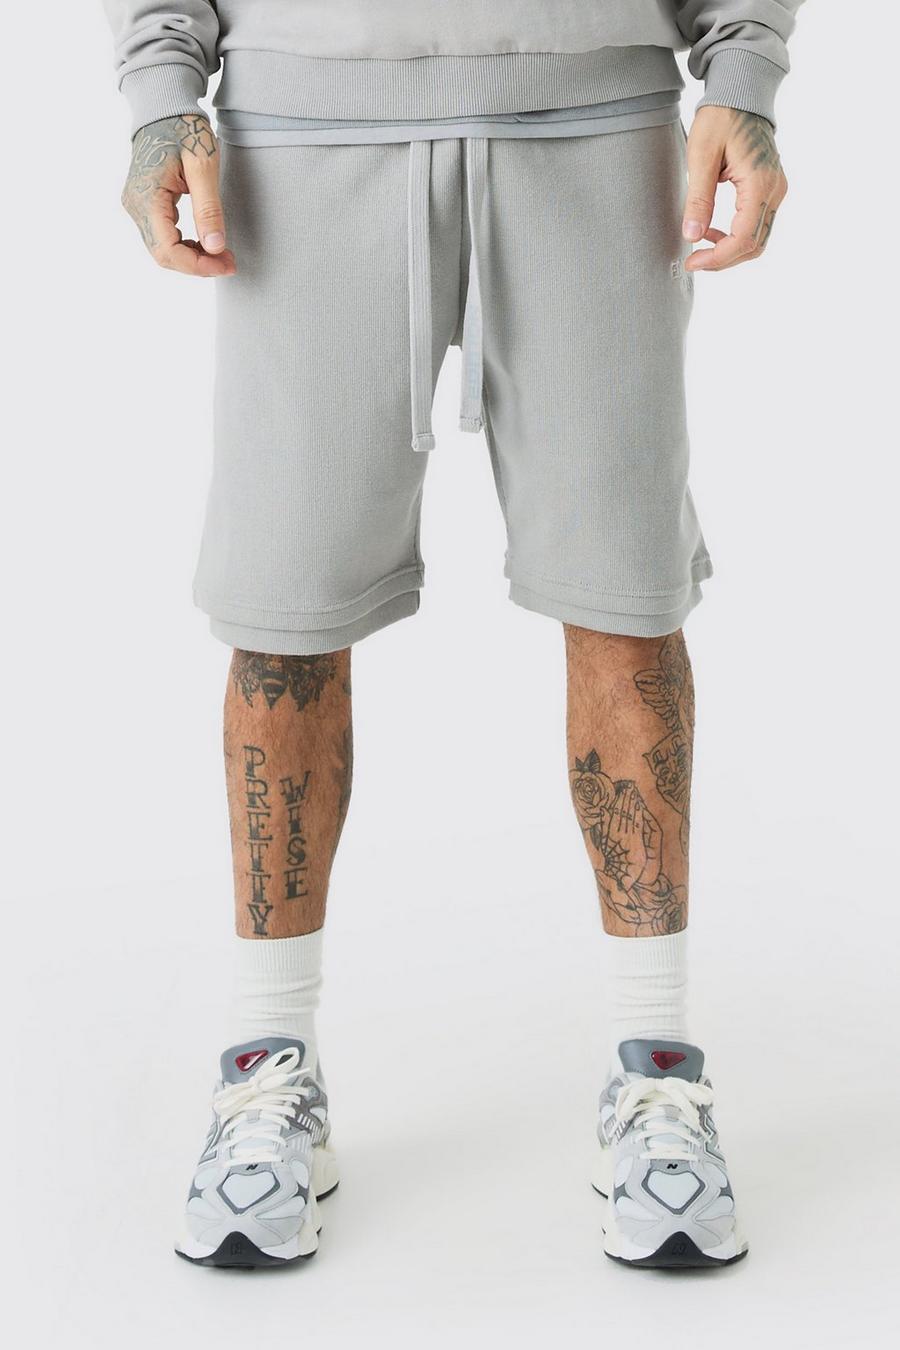 Tall lockere gerippte Edition Shorts, Grey